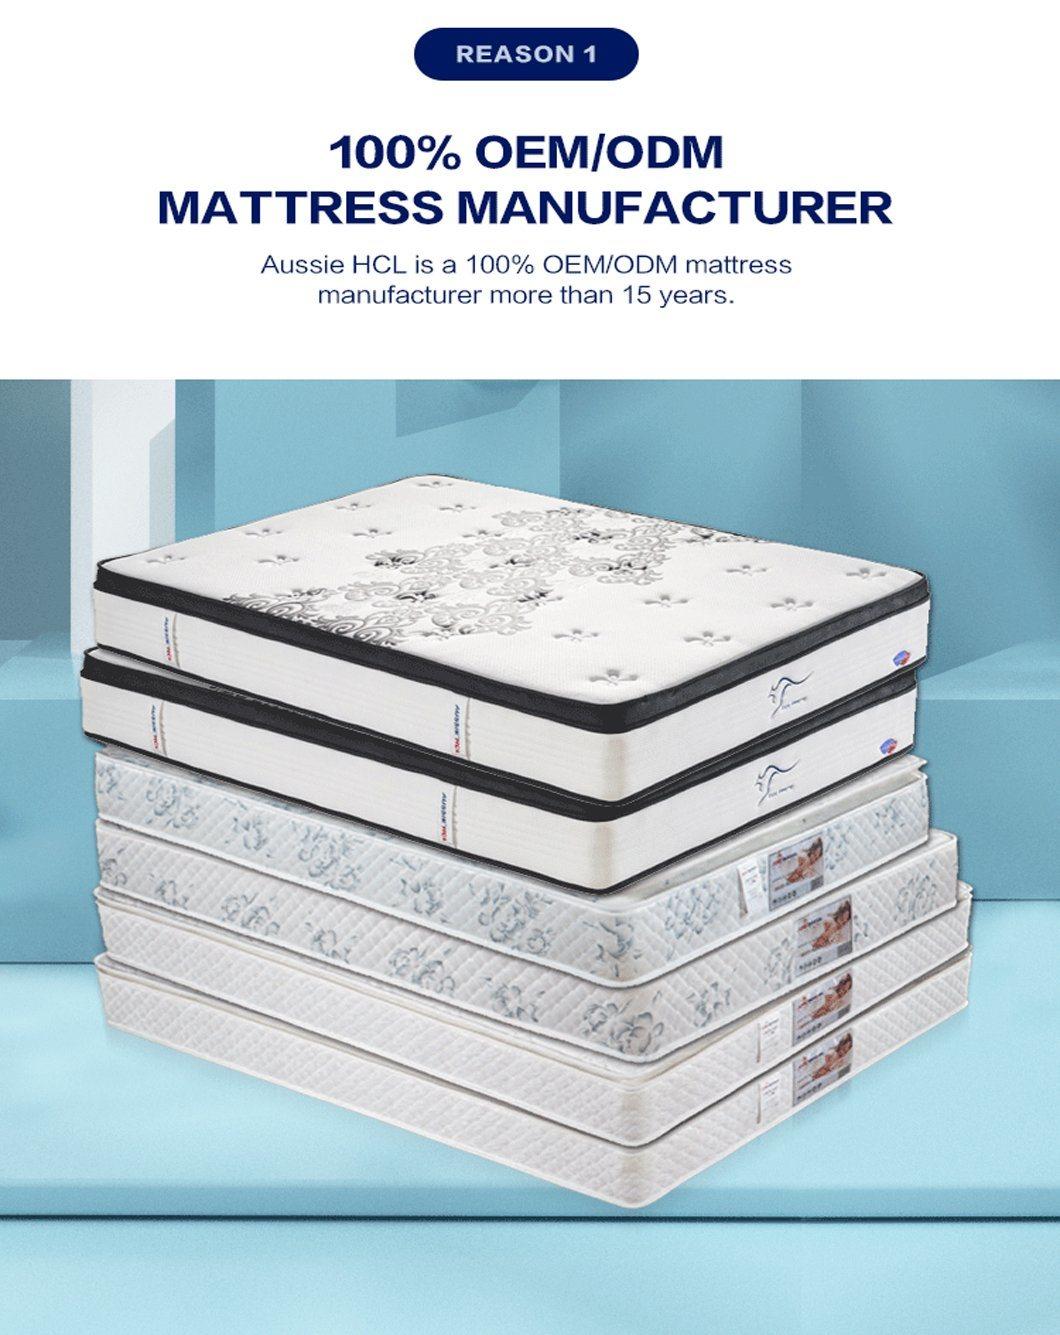 Premium Innerspring Mattresses Roll Sleeping Well Double Inch Full King Queen Spring Foam Mattress Bedroom Furniture